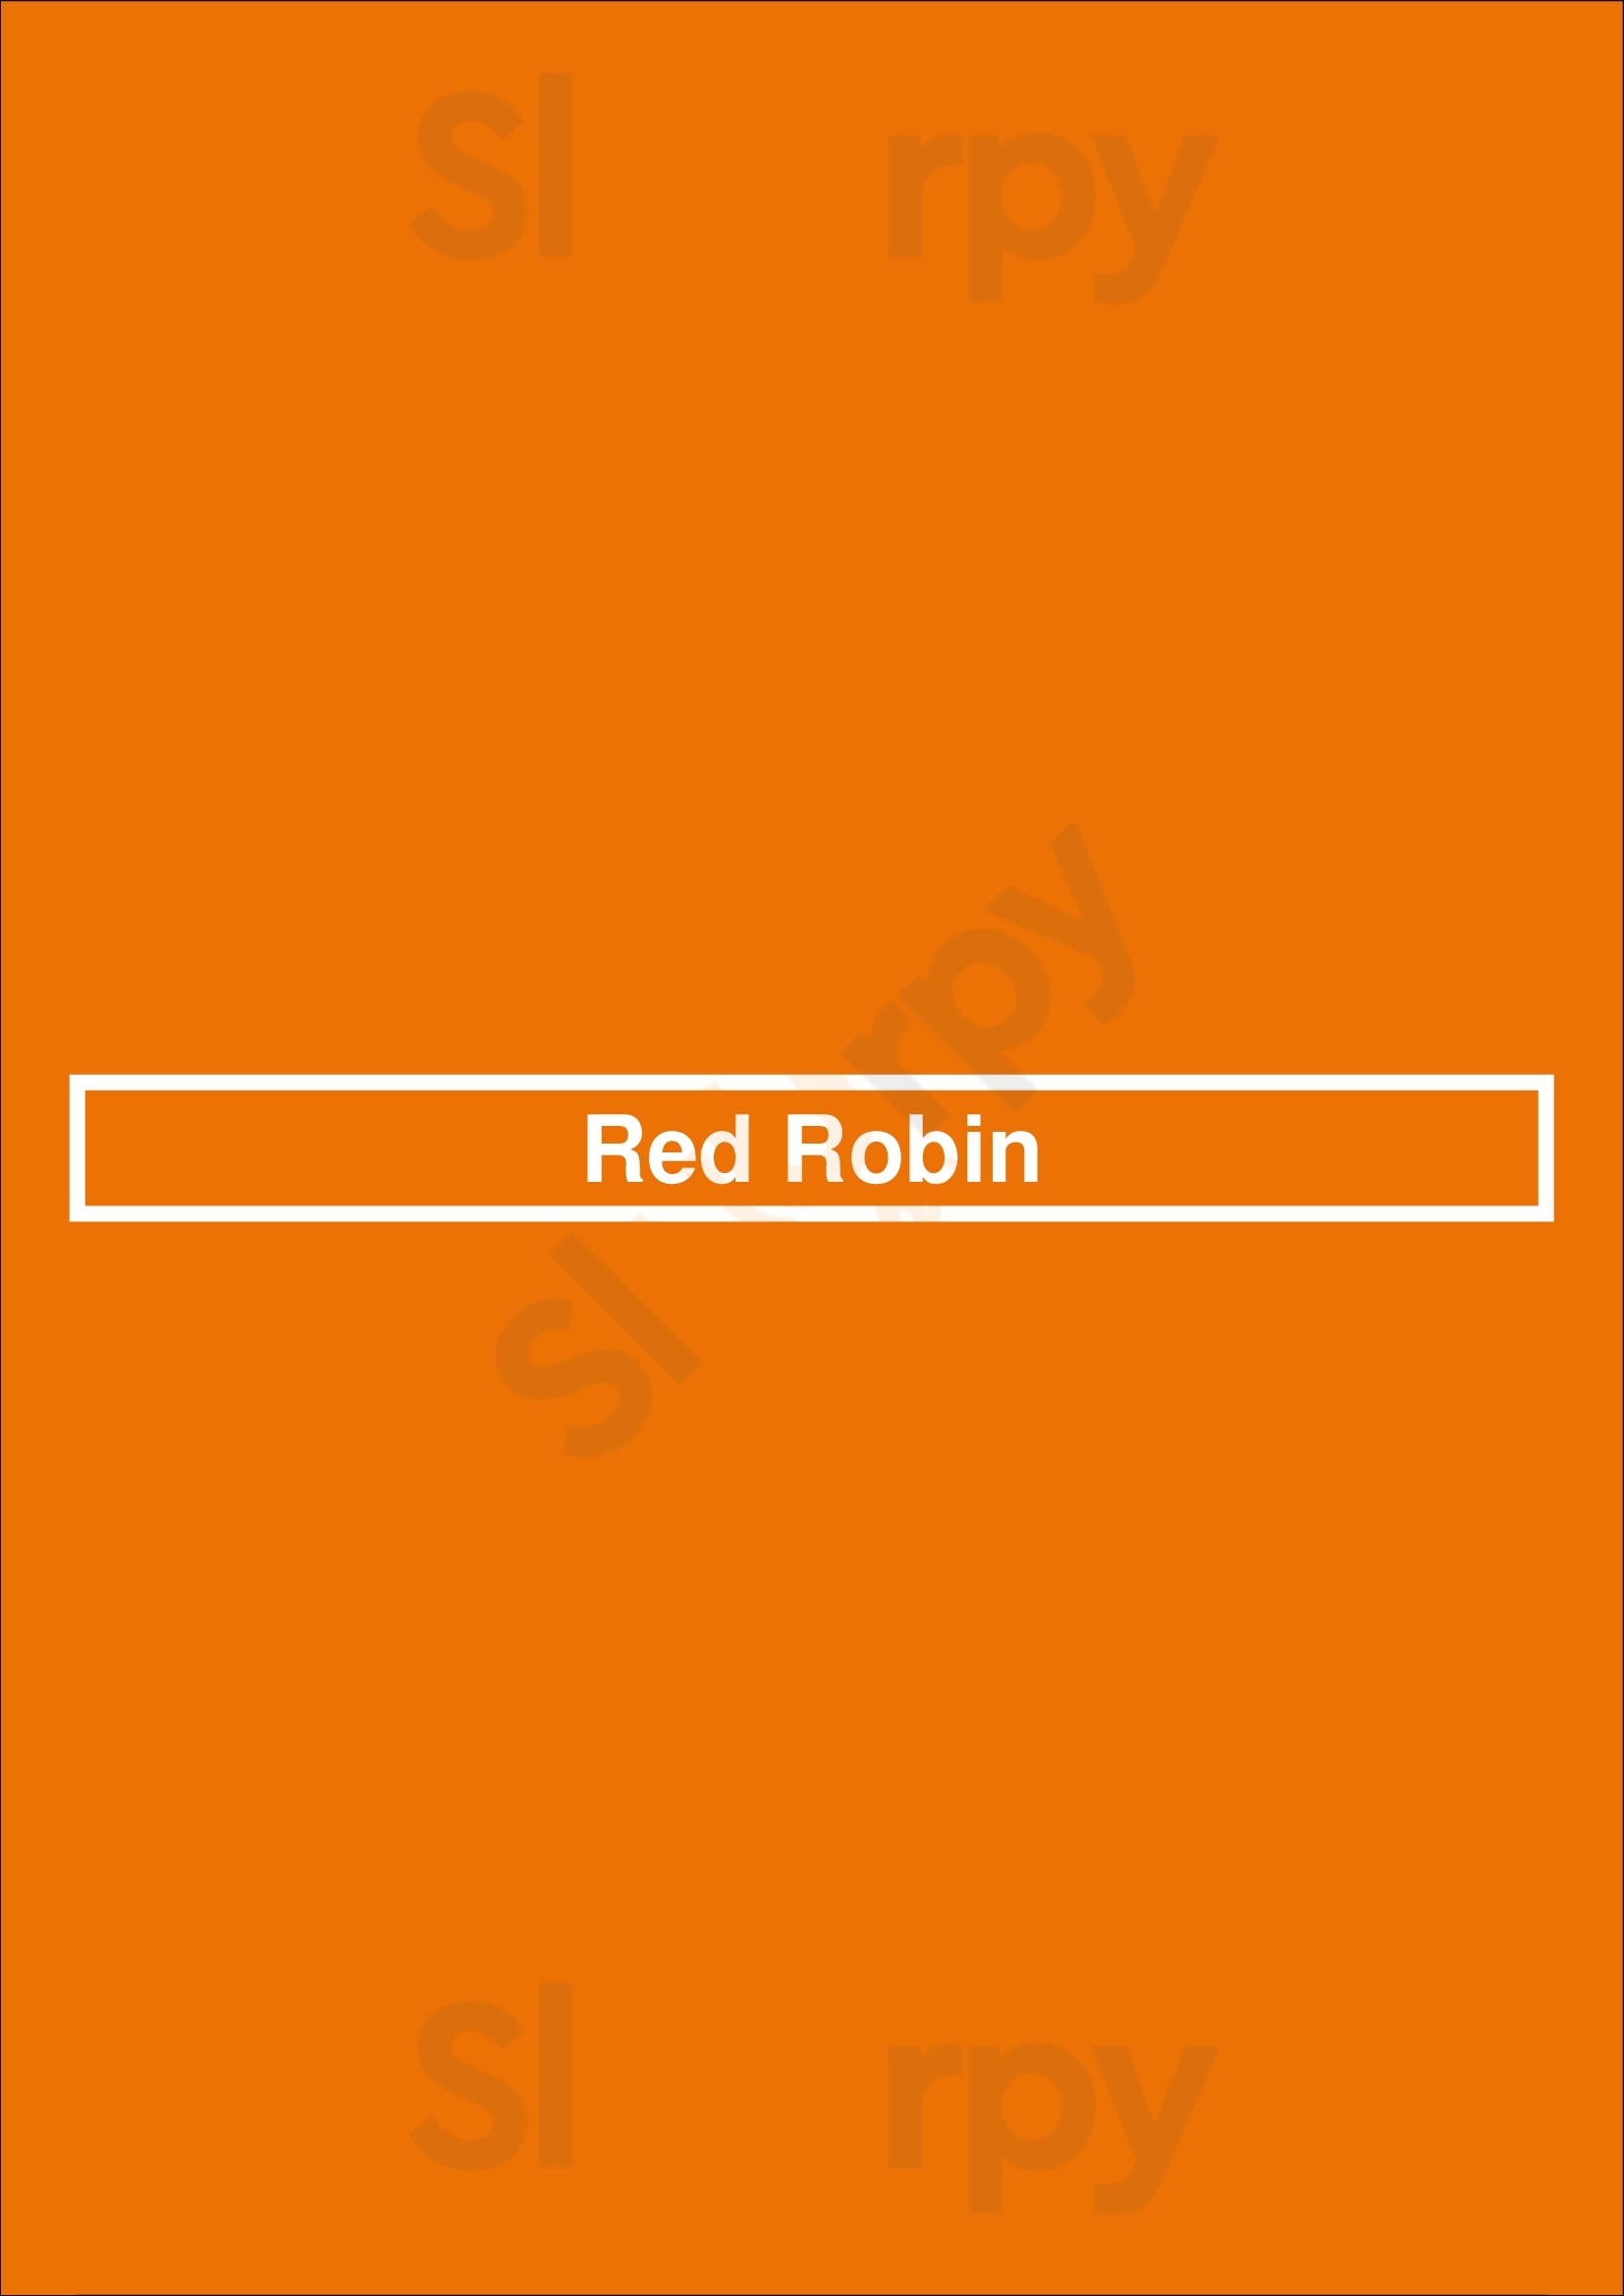 Red Robin Richmond Menu - 1